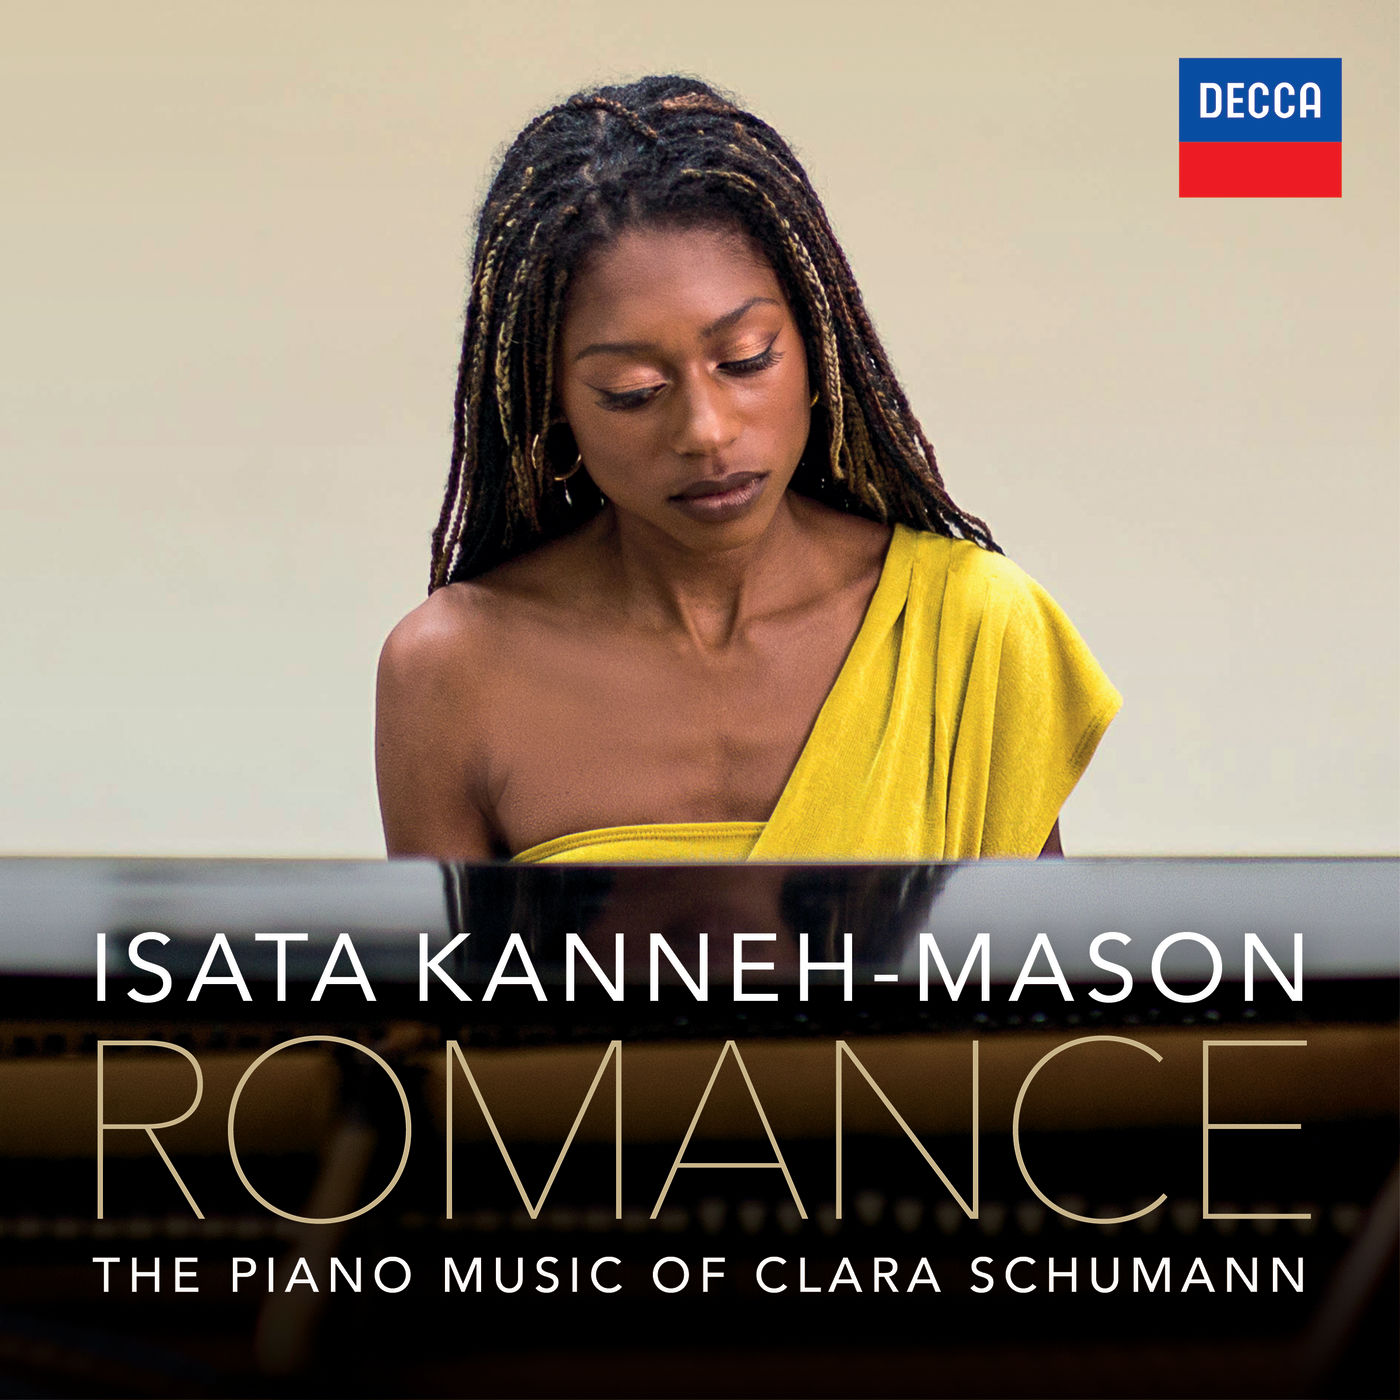 Piano Music of Clara Schumann - Romance - Isata Kanneh-Mason 24-96